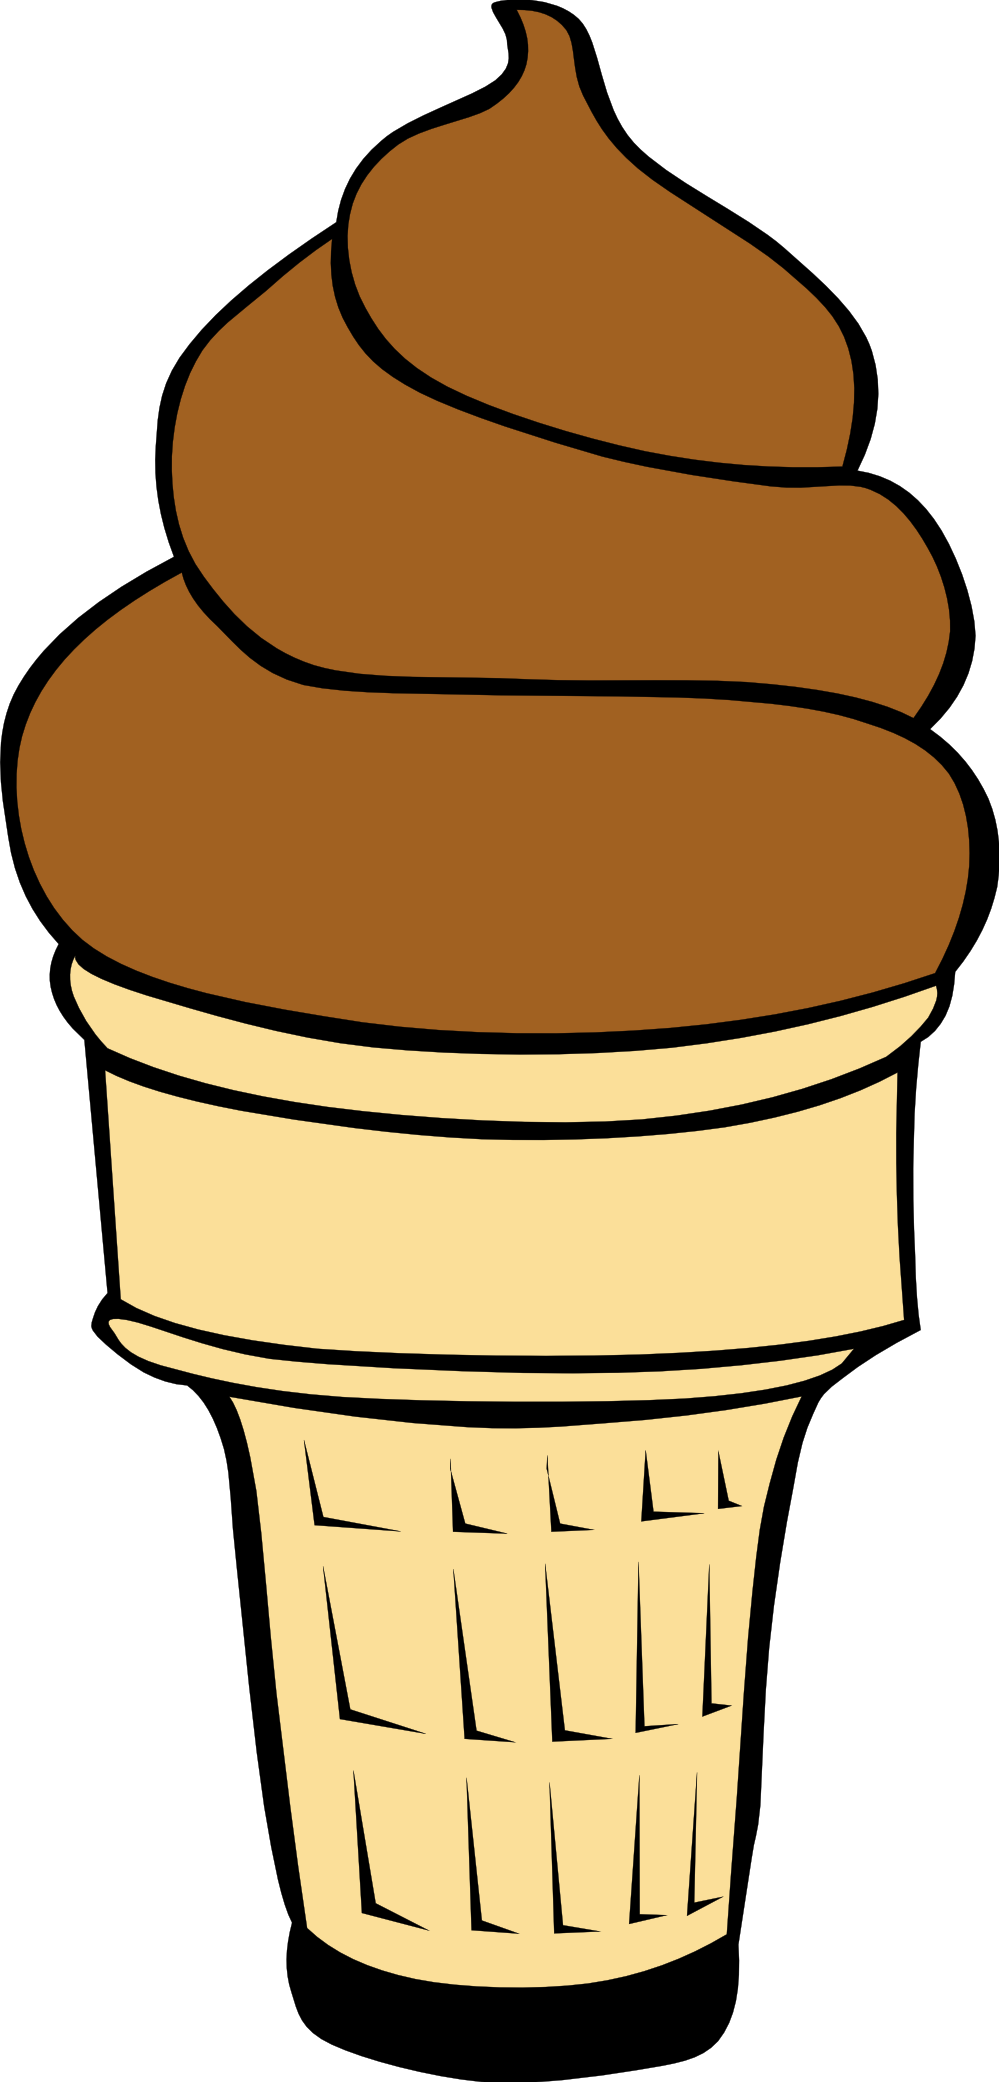 Ice cream cone ice cream no c